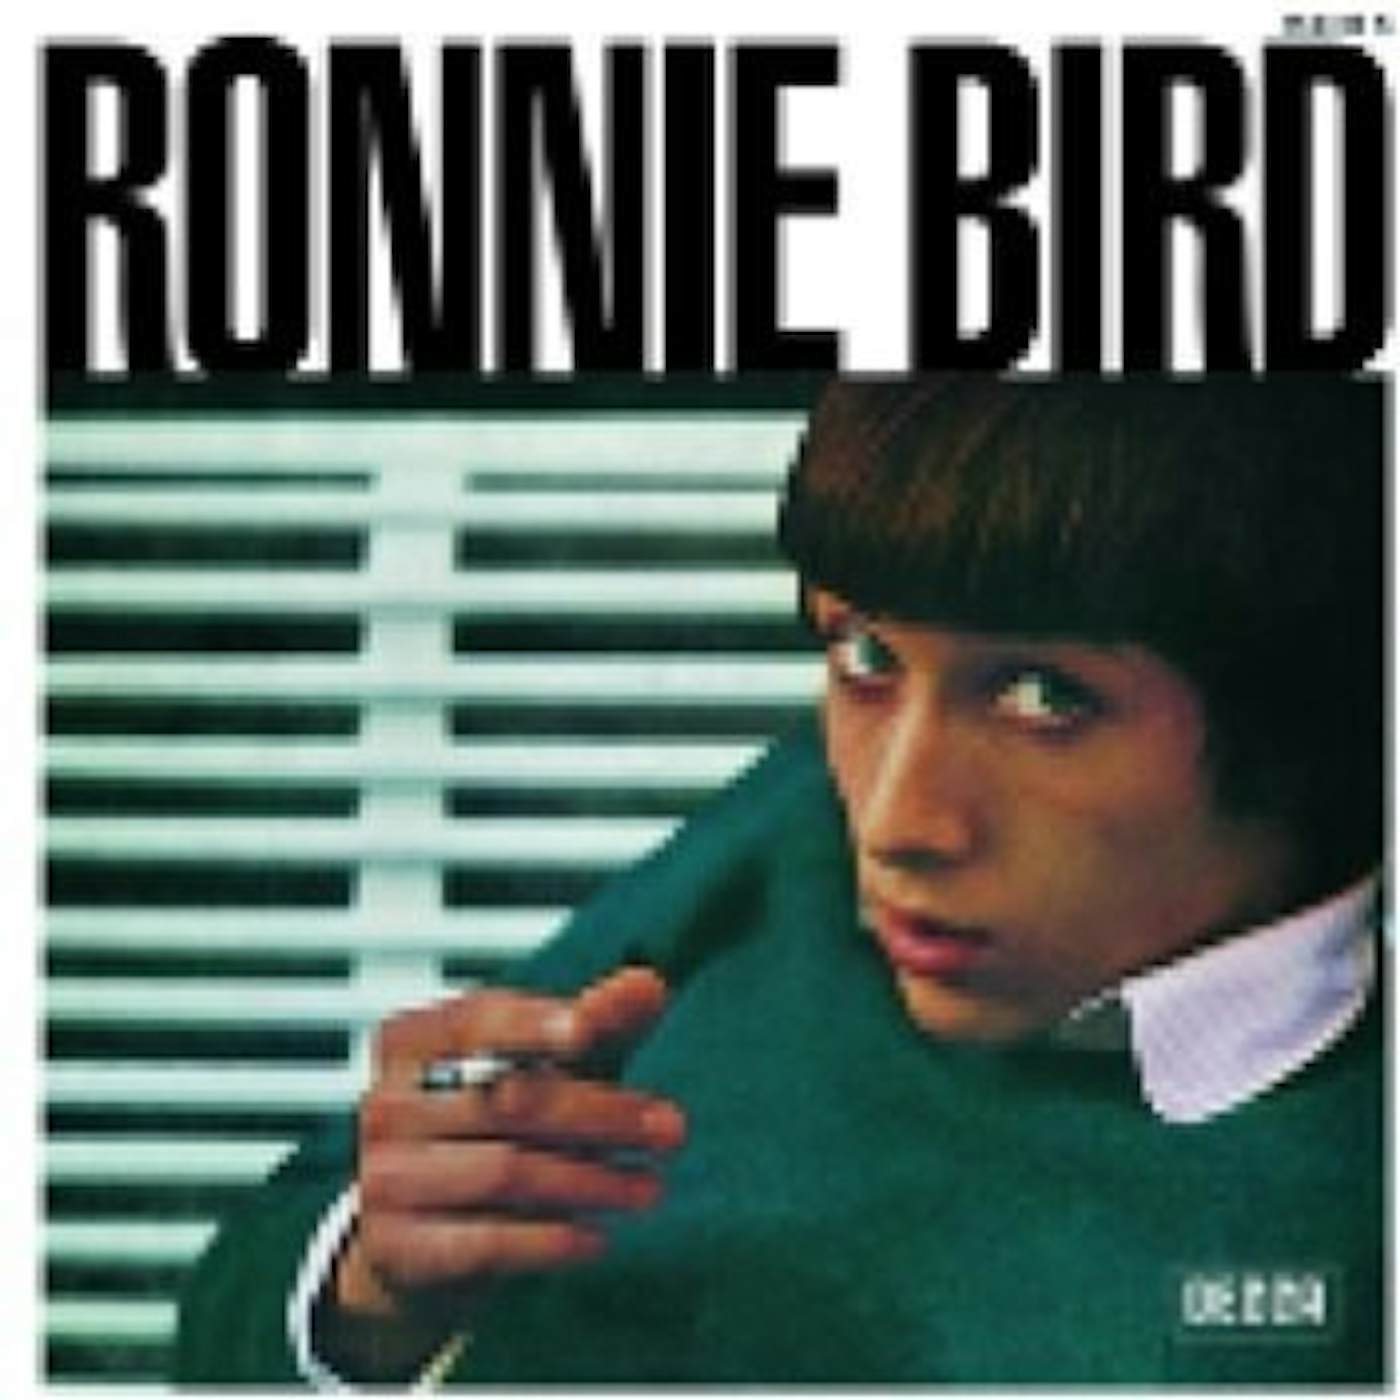 Ronnie Bird Vinyl Record